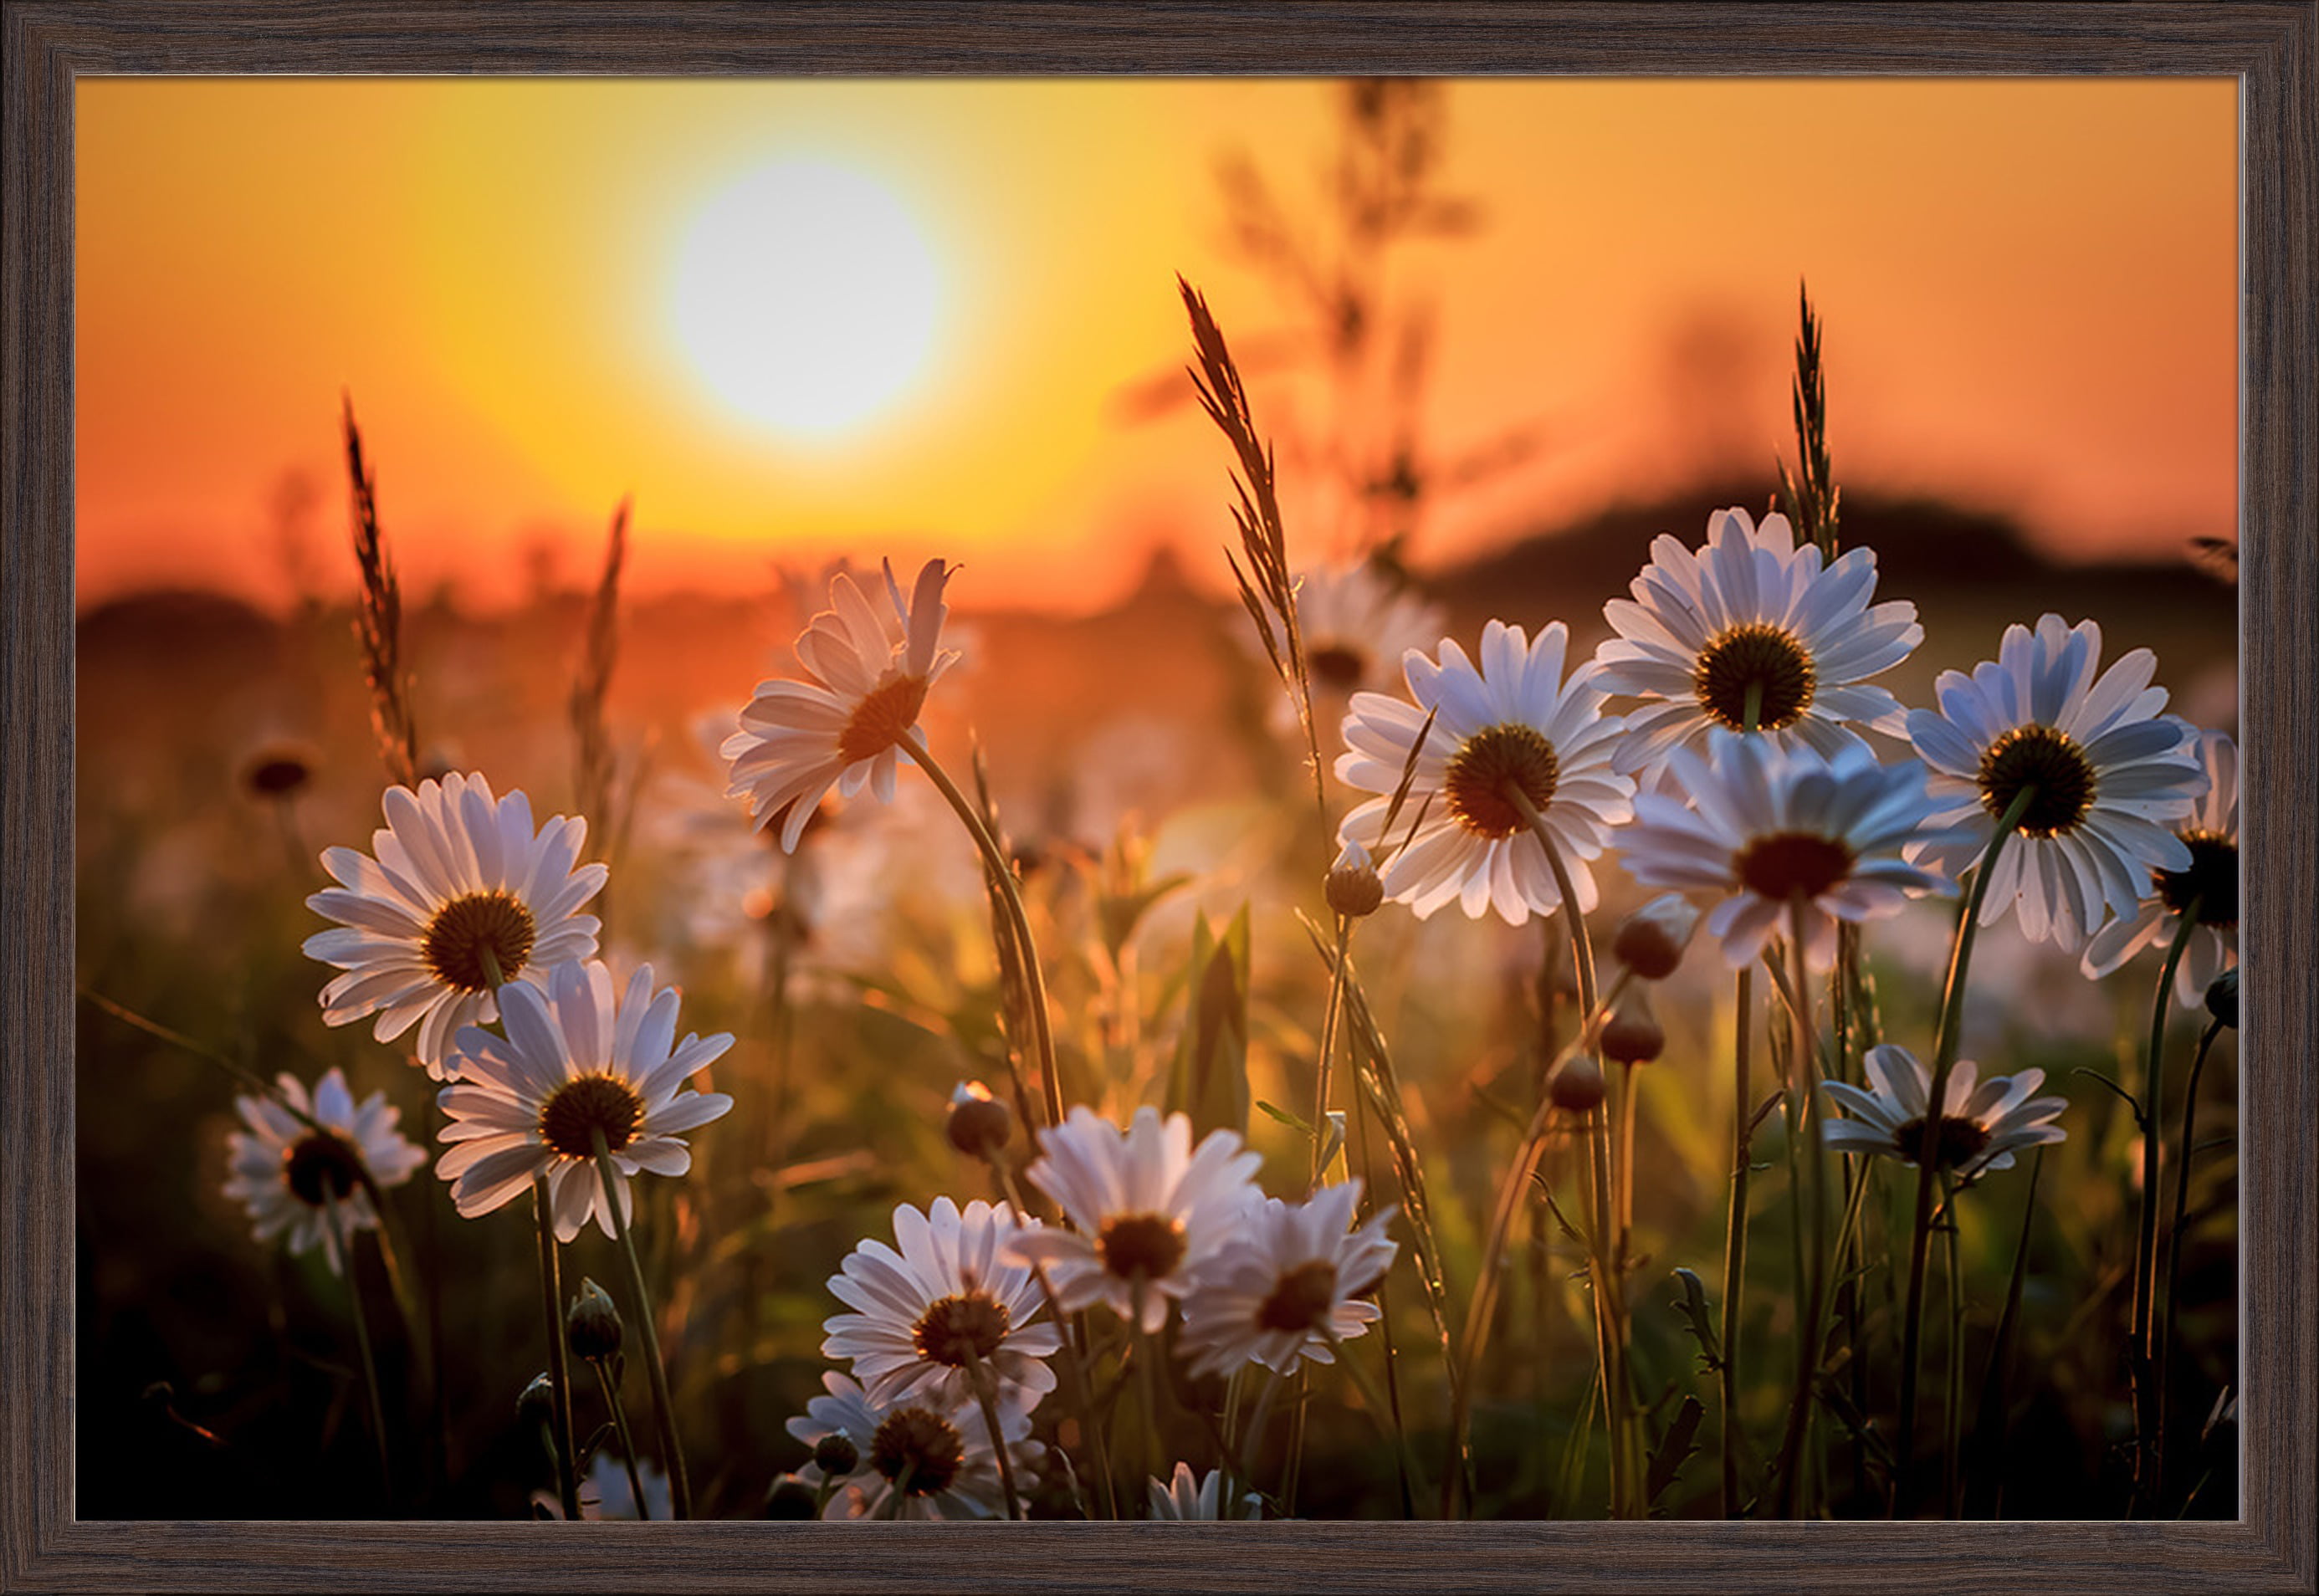 Daisy Flower Field at Sunset - Lantern Press Photography (24x16 Giclee